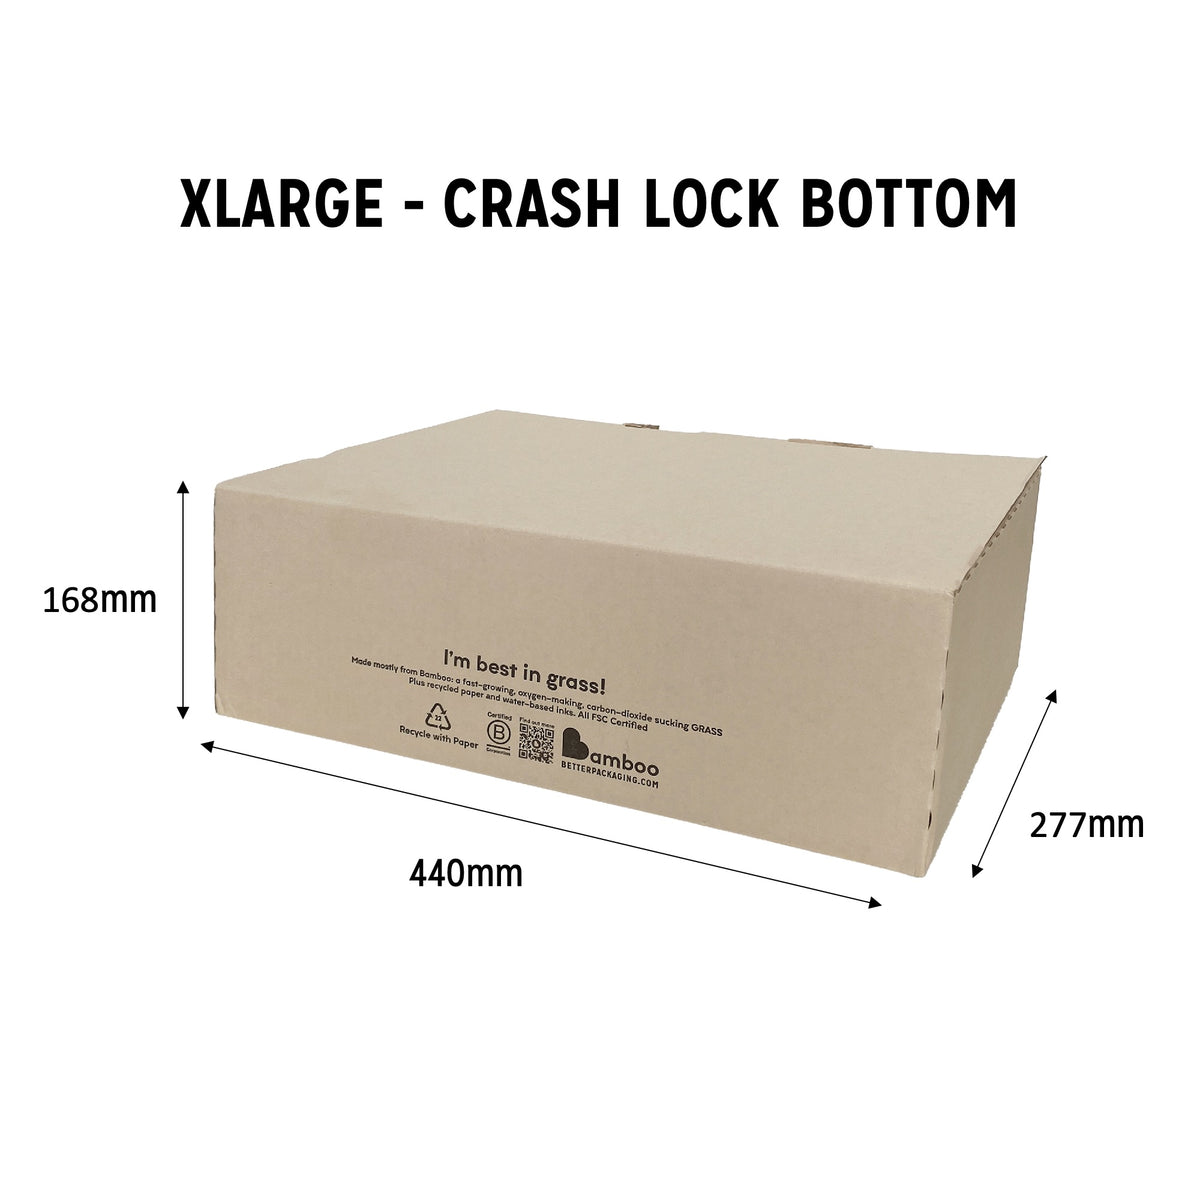 Xlarge sized crash lock Better Packaging bamboo box. 168mm high, 440mm wide, 277mm deep